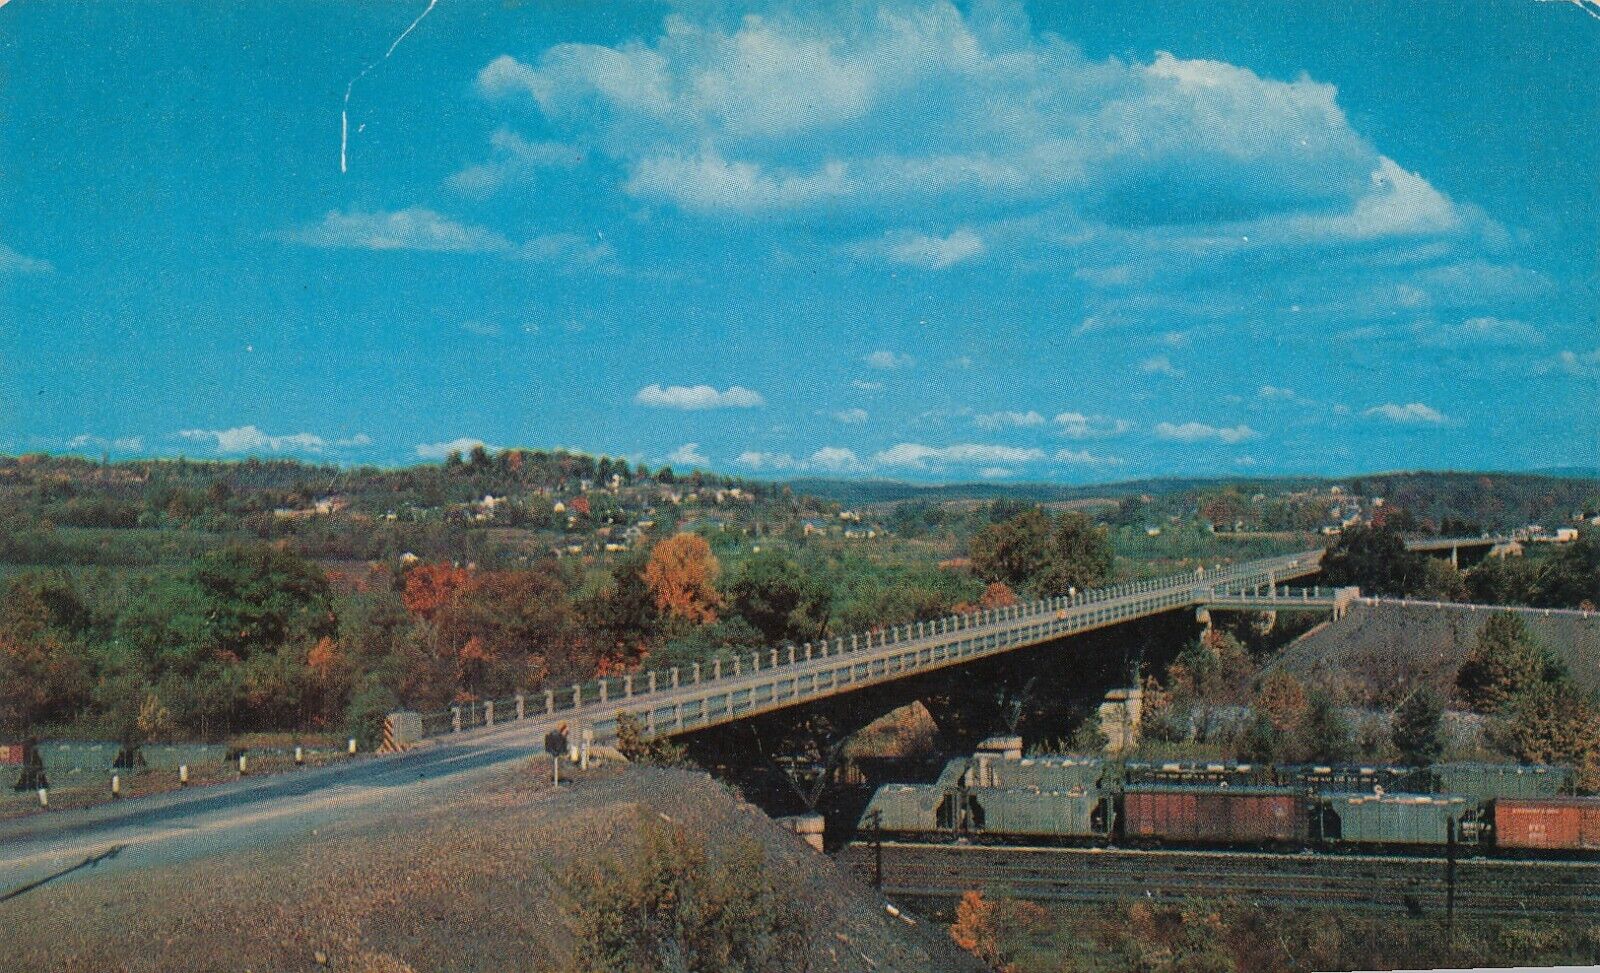 Million Dollar Bridge over Potomac River at Hancock, MD and WV vintage Rail Road